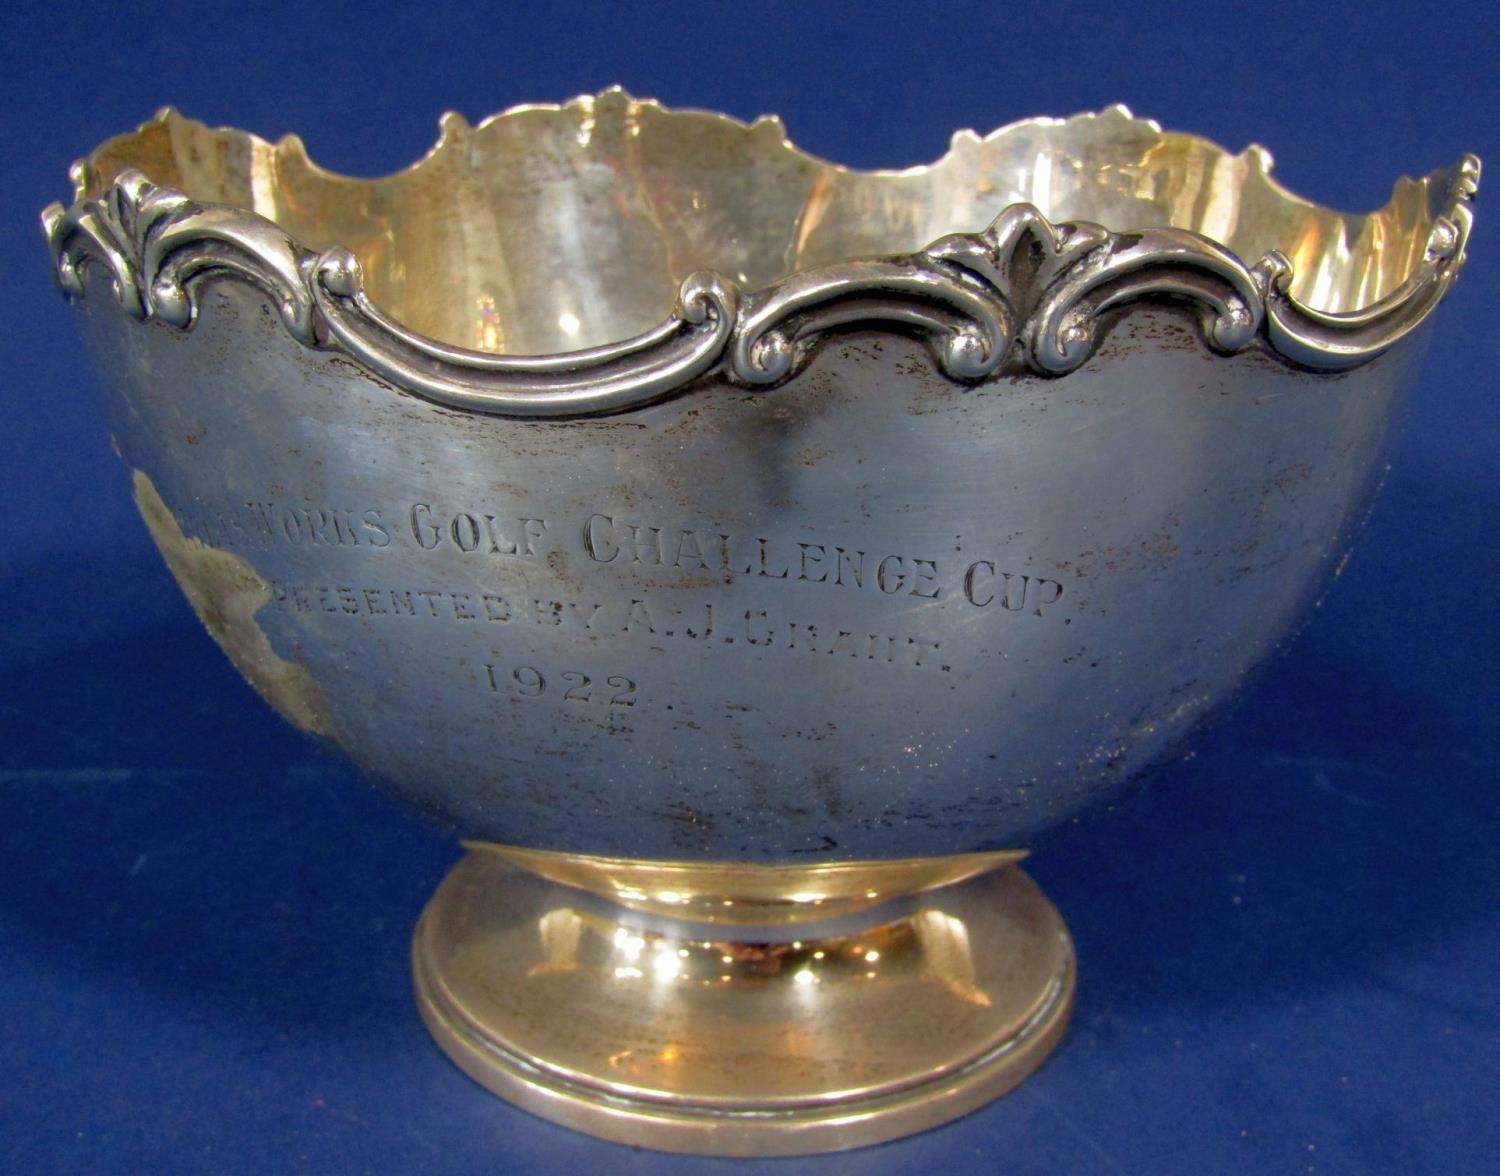 1920s silver presentation pedestal bowl inscribed Atlas Works Golf Challenge Cup, Presented by AJ